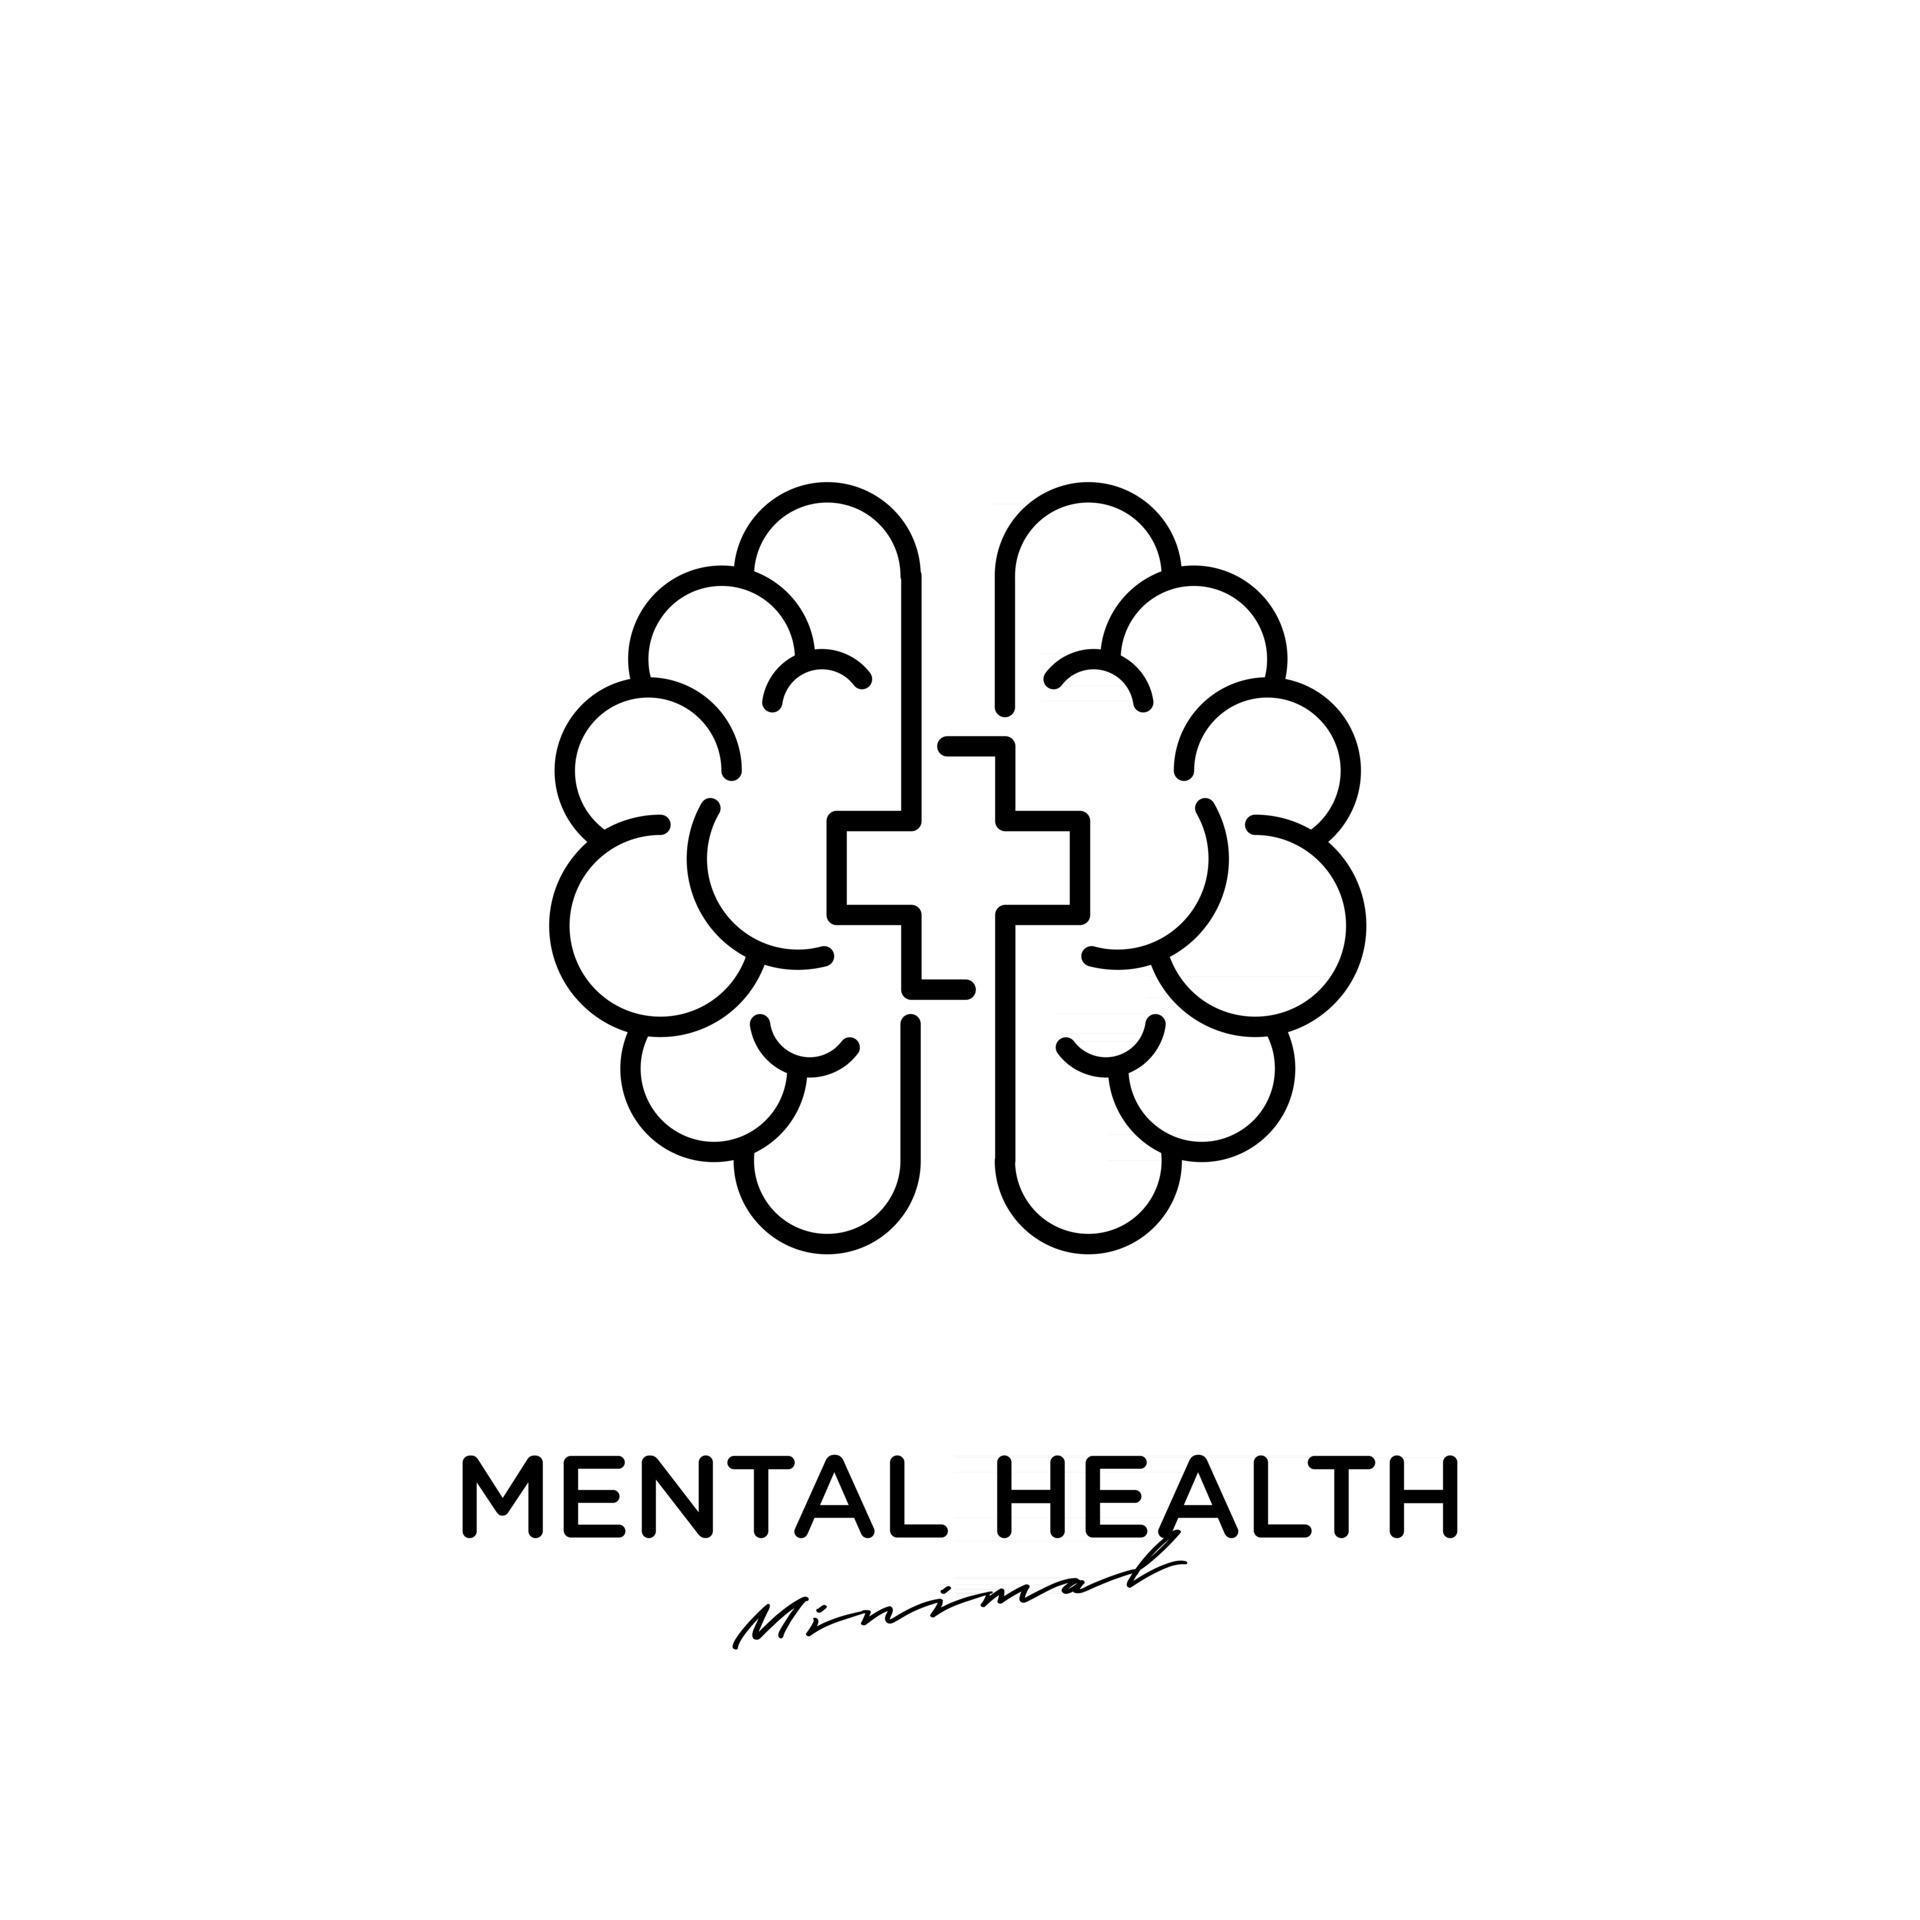 mental health logo ideas 2